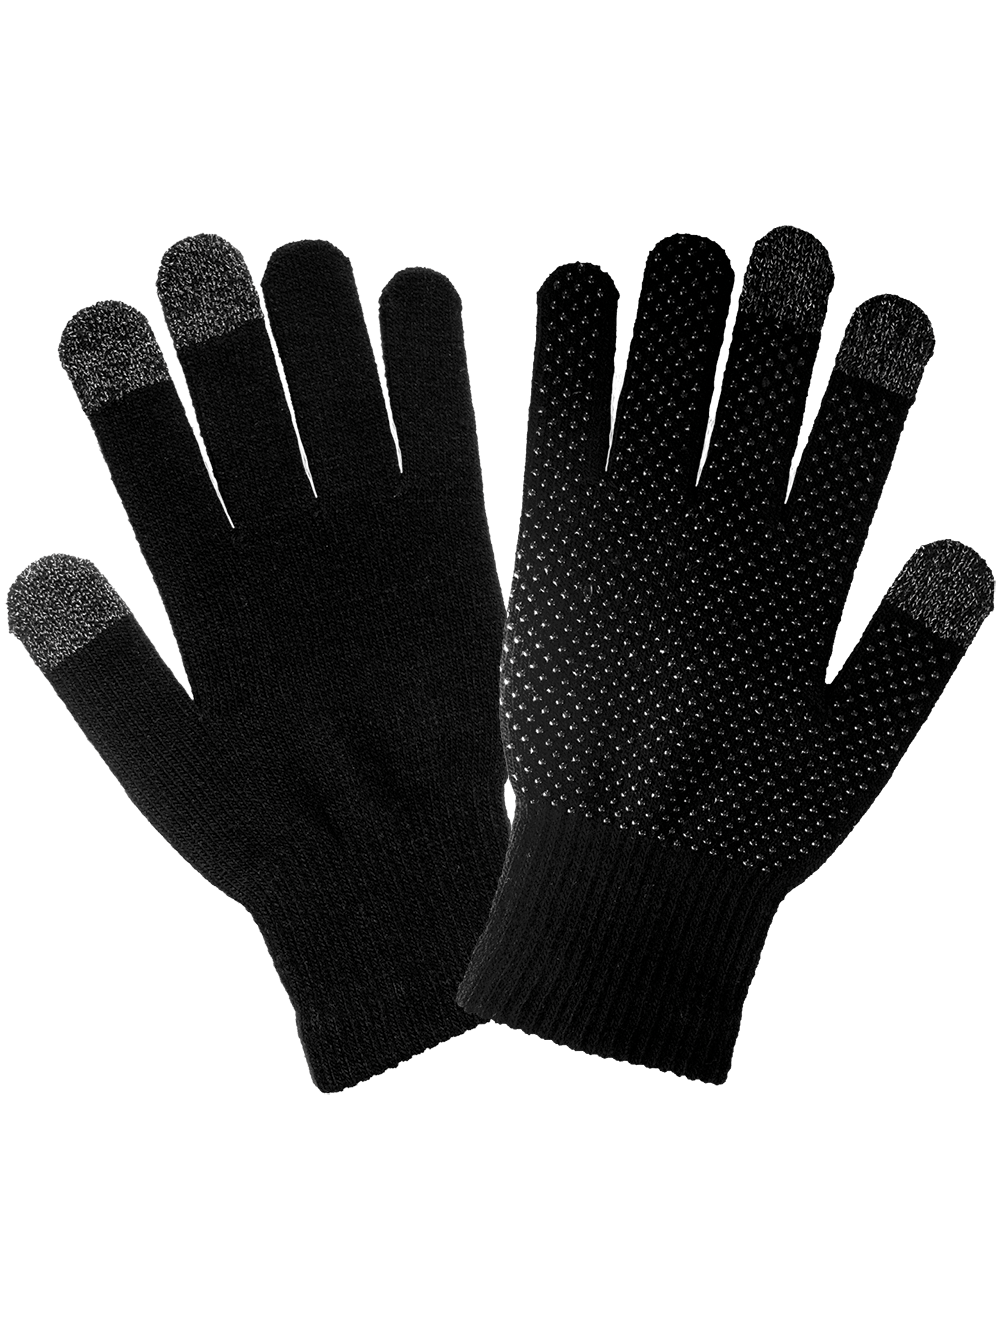 Nylon Acrylic Magic Touch Screen Gloves for iPhone iPad - China